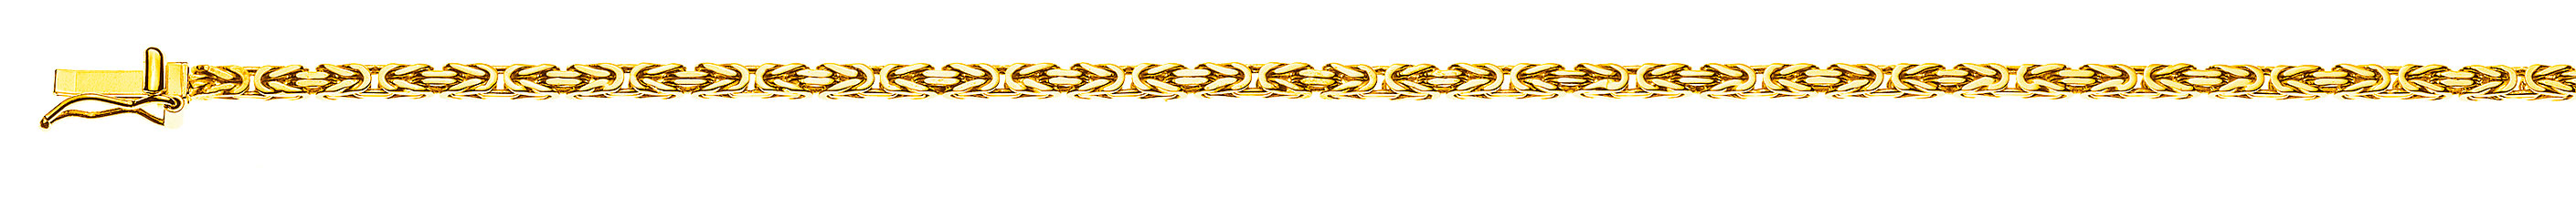 AURONOS Prestige Necklace Yellow Gold 18K King Chain 45cm 2mm